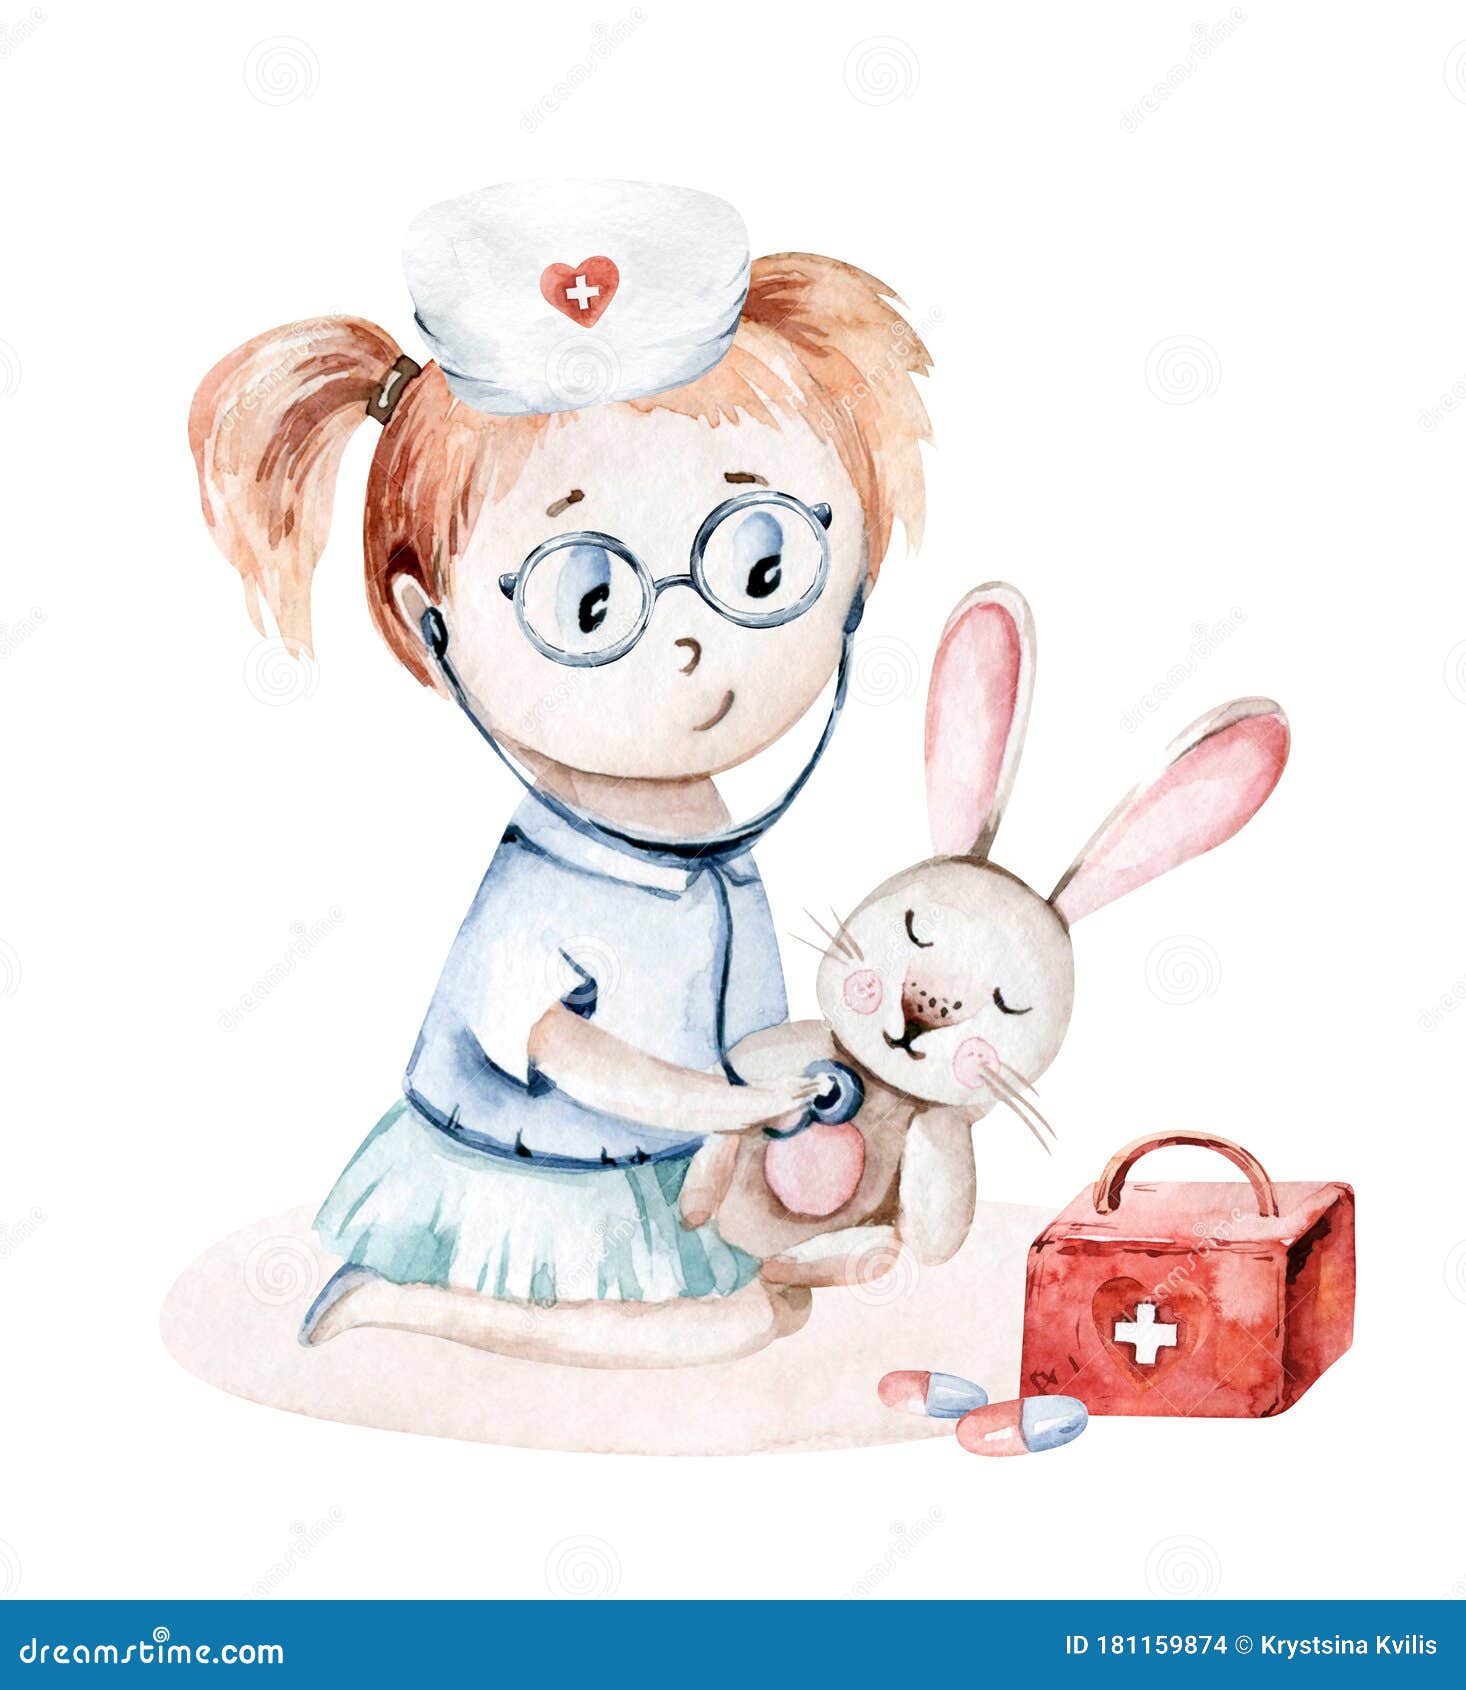 375 Nurse Cartoon Stock Photos - Free & Royalty-Free Stock Photos from  Dreamstime